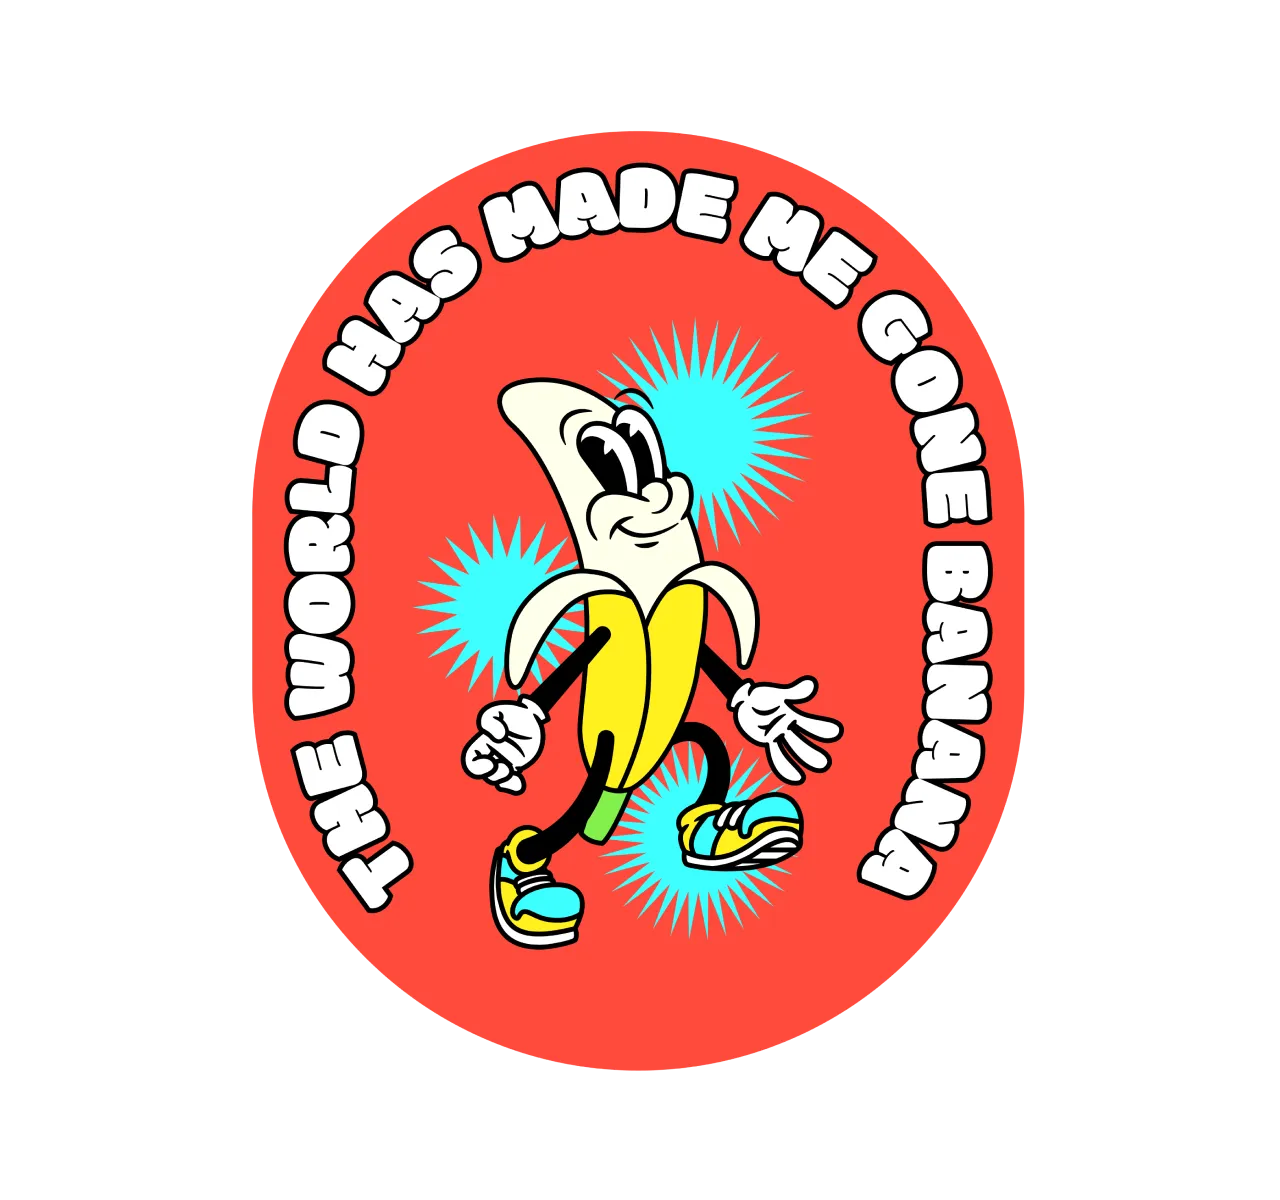 Cartoon Badge of a Banana